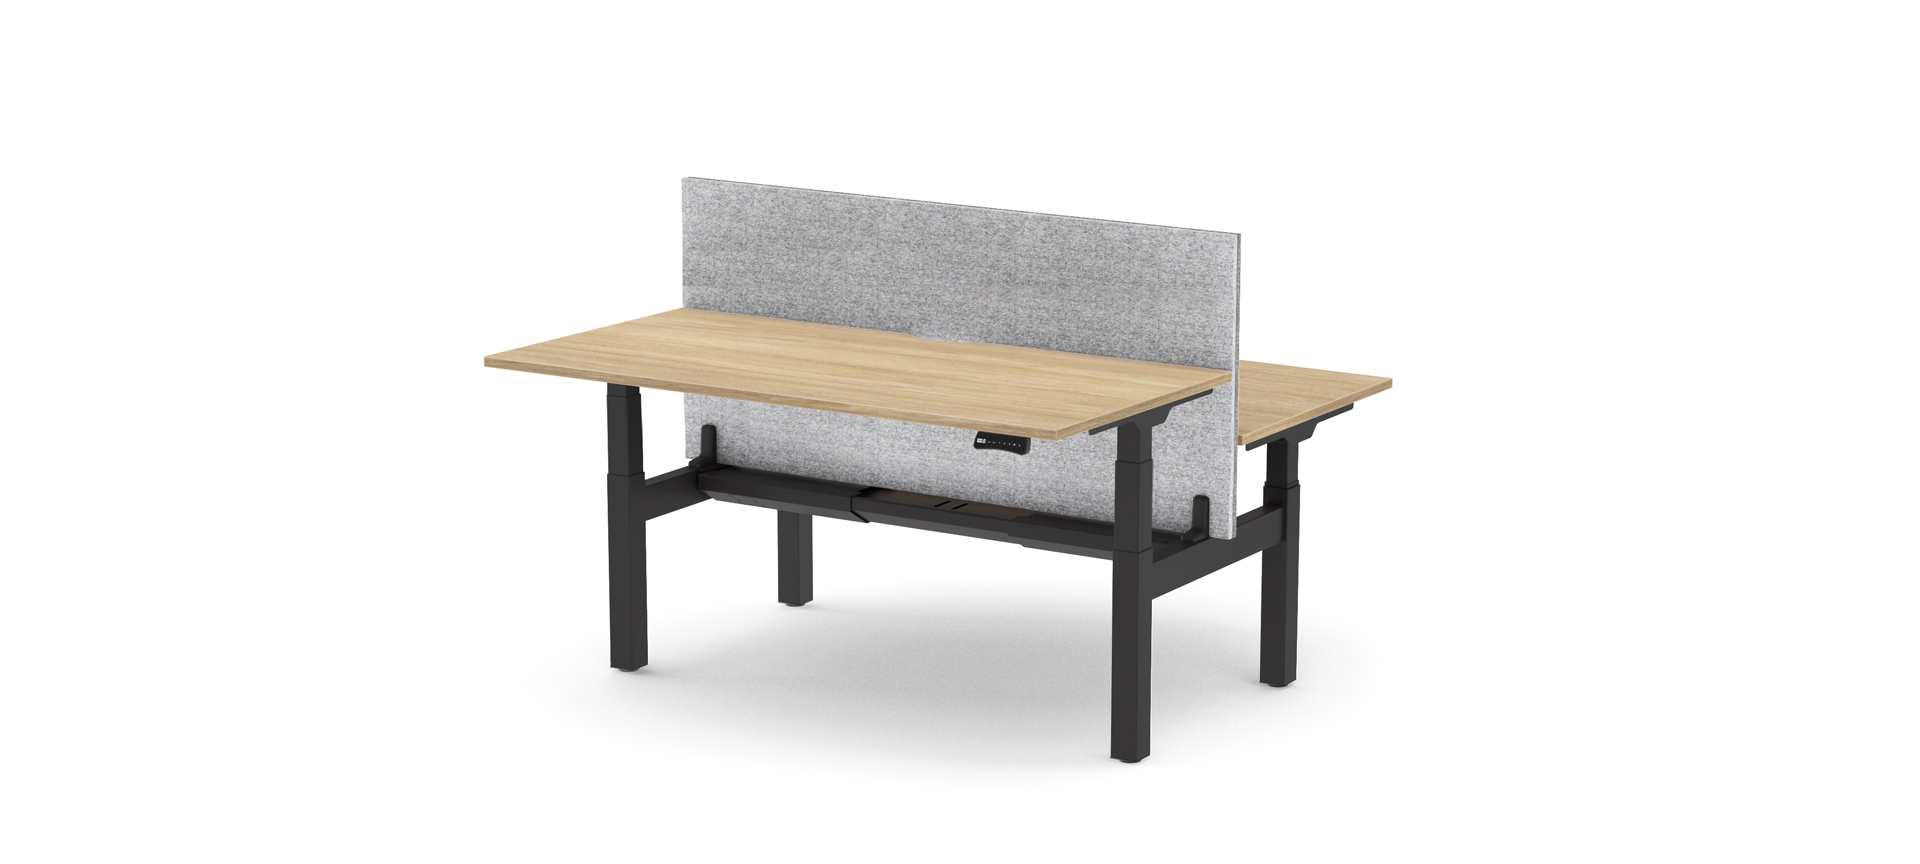 Formetiq Alto 2 sit-stand height adjustable 2-desk bench